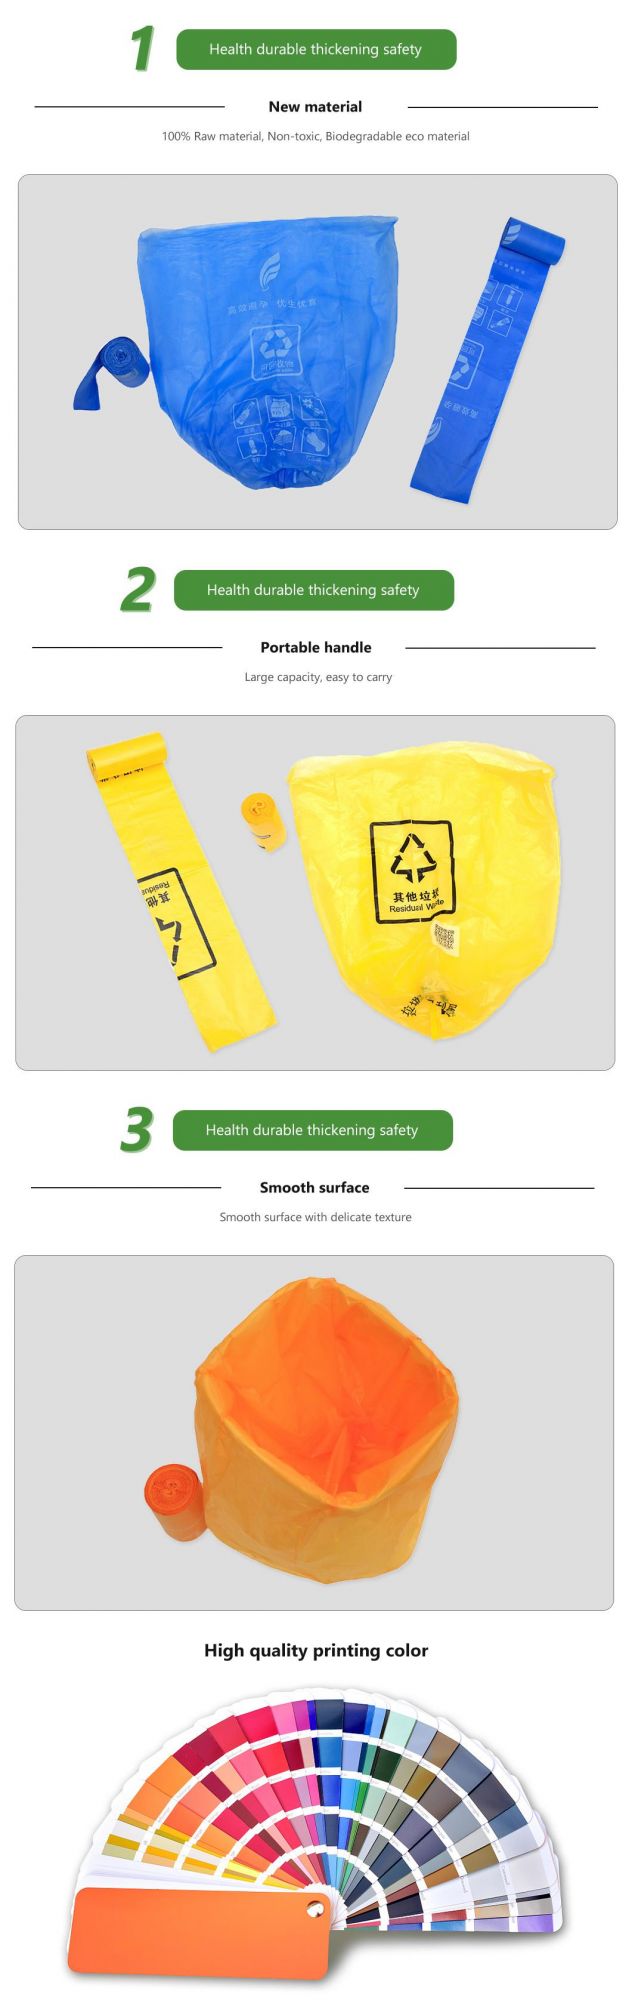 PLA+Pbat/Pbat+Corn Starch Biodegradable Bags, Compostable Bags, Garbage Bags for Restaurant